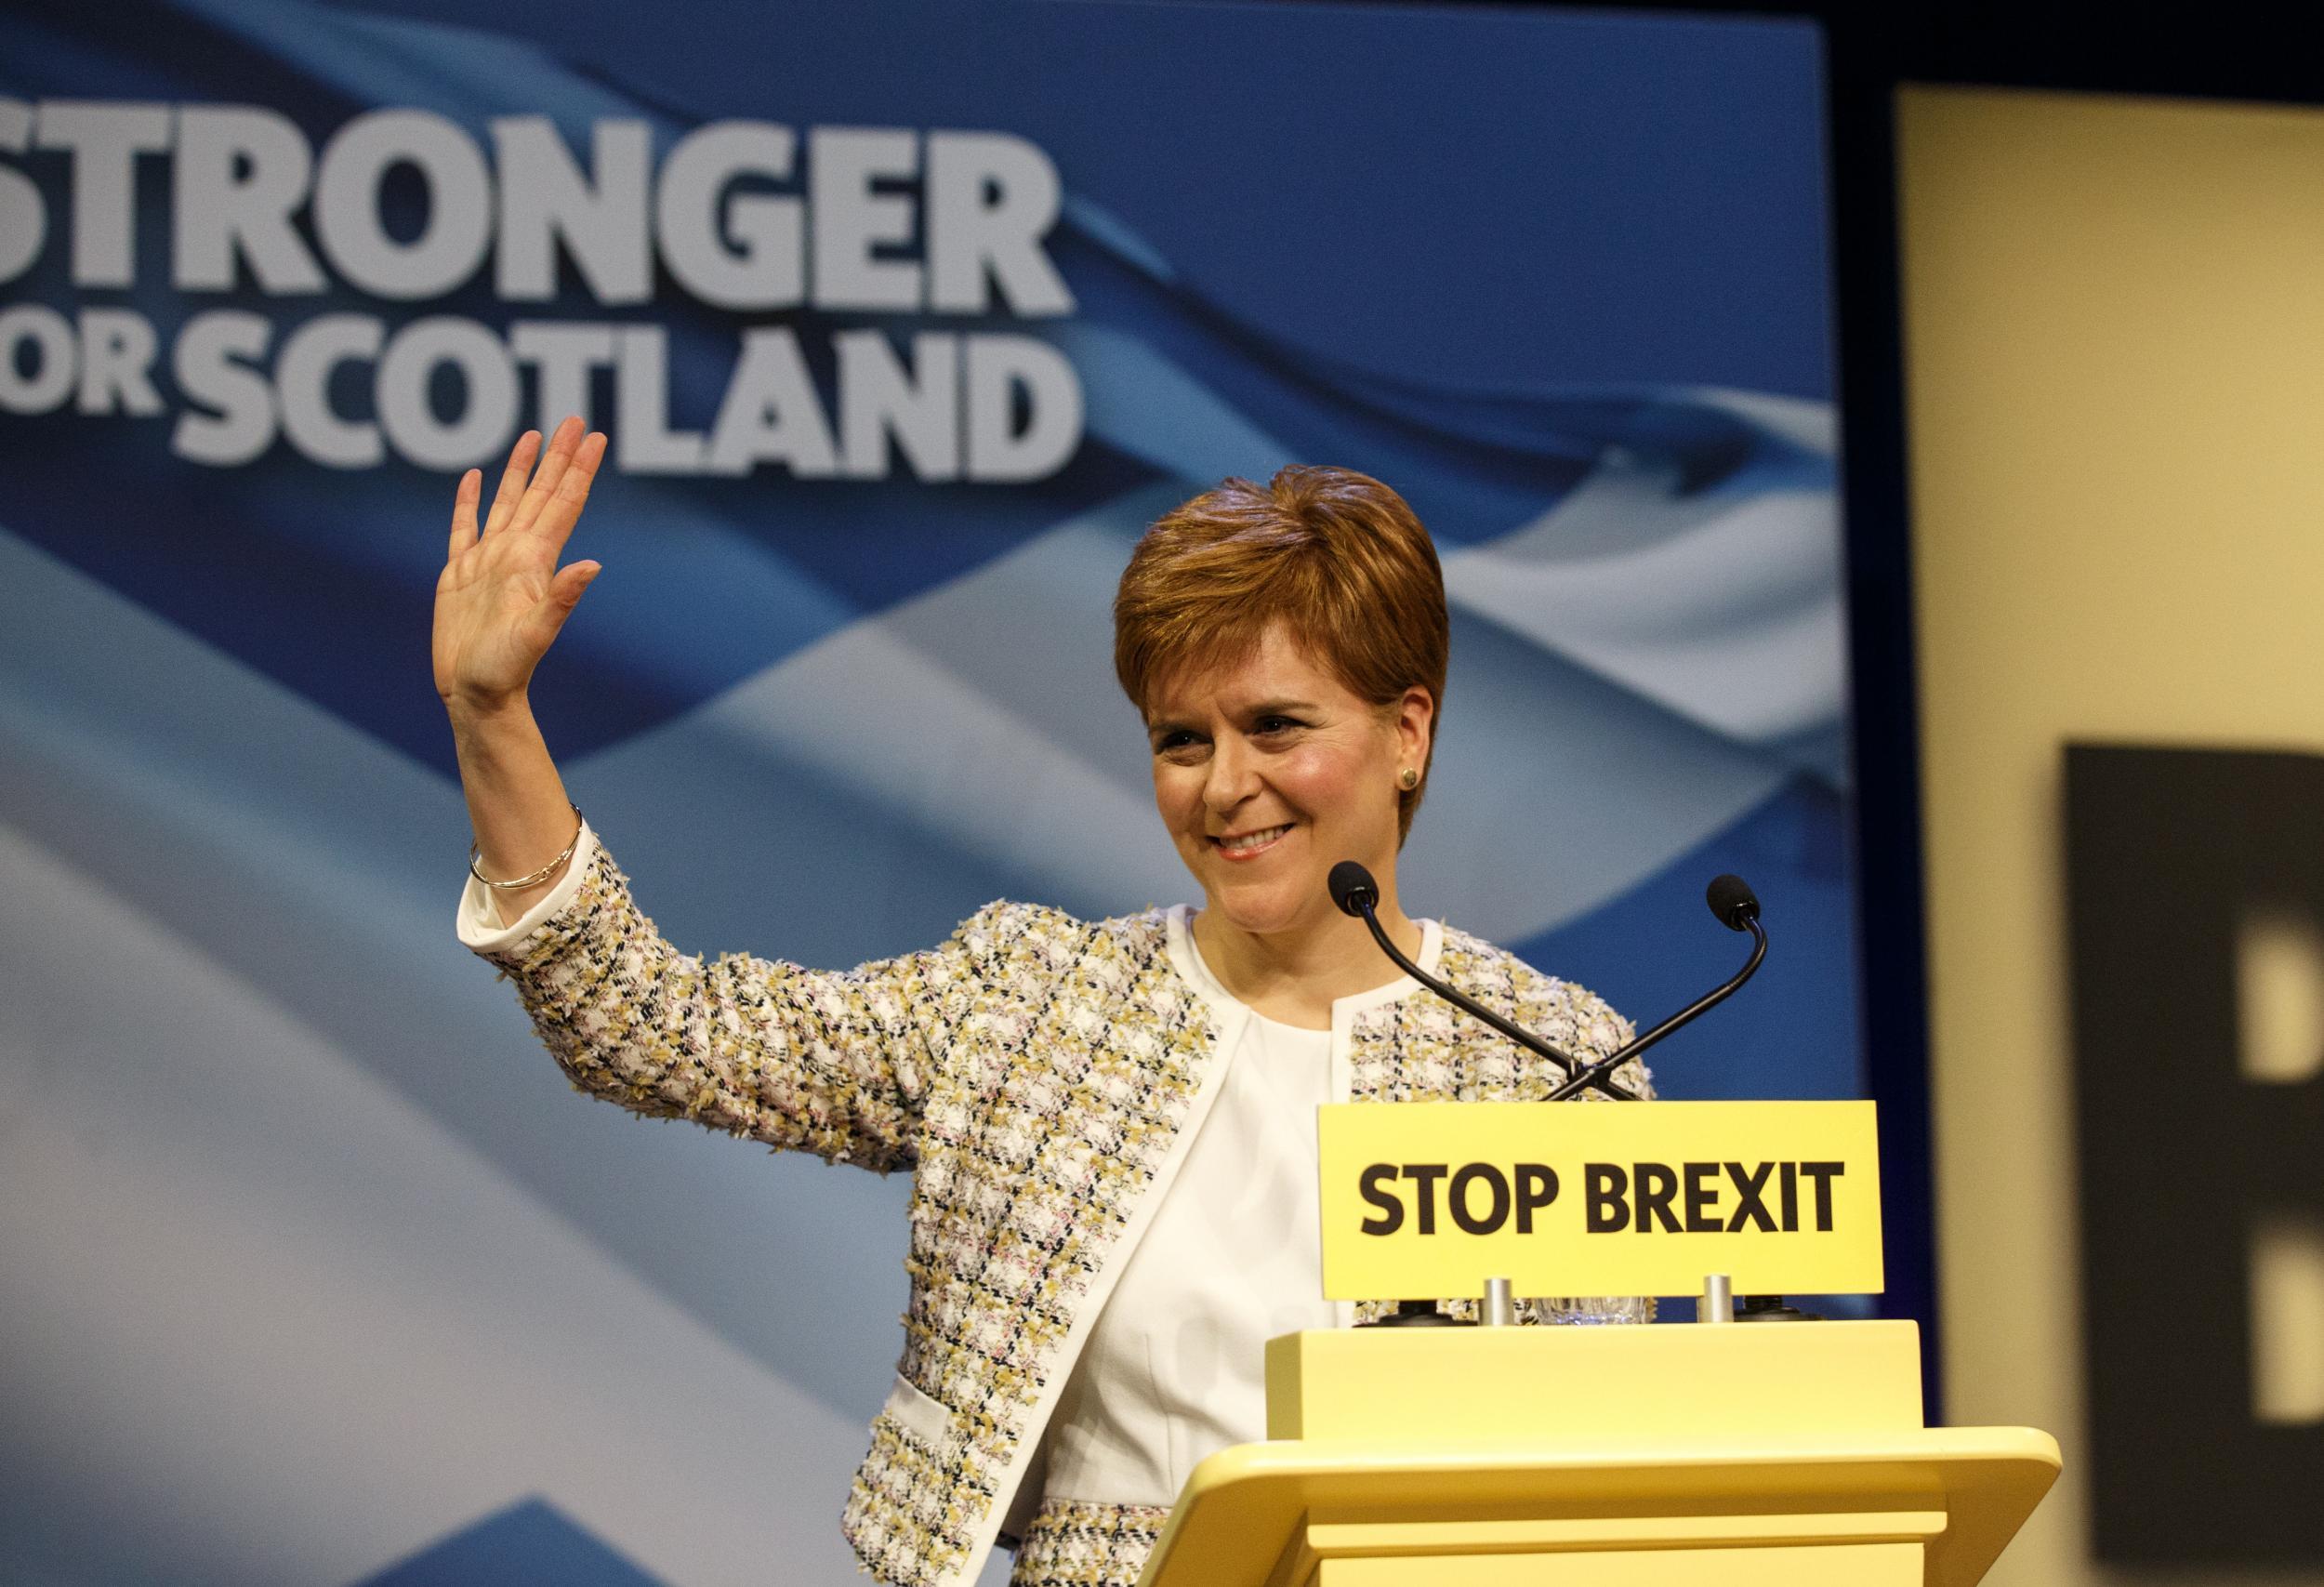 Nicola Sturgeon during the launch of the SNP Manifesto in Glasgow